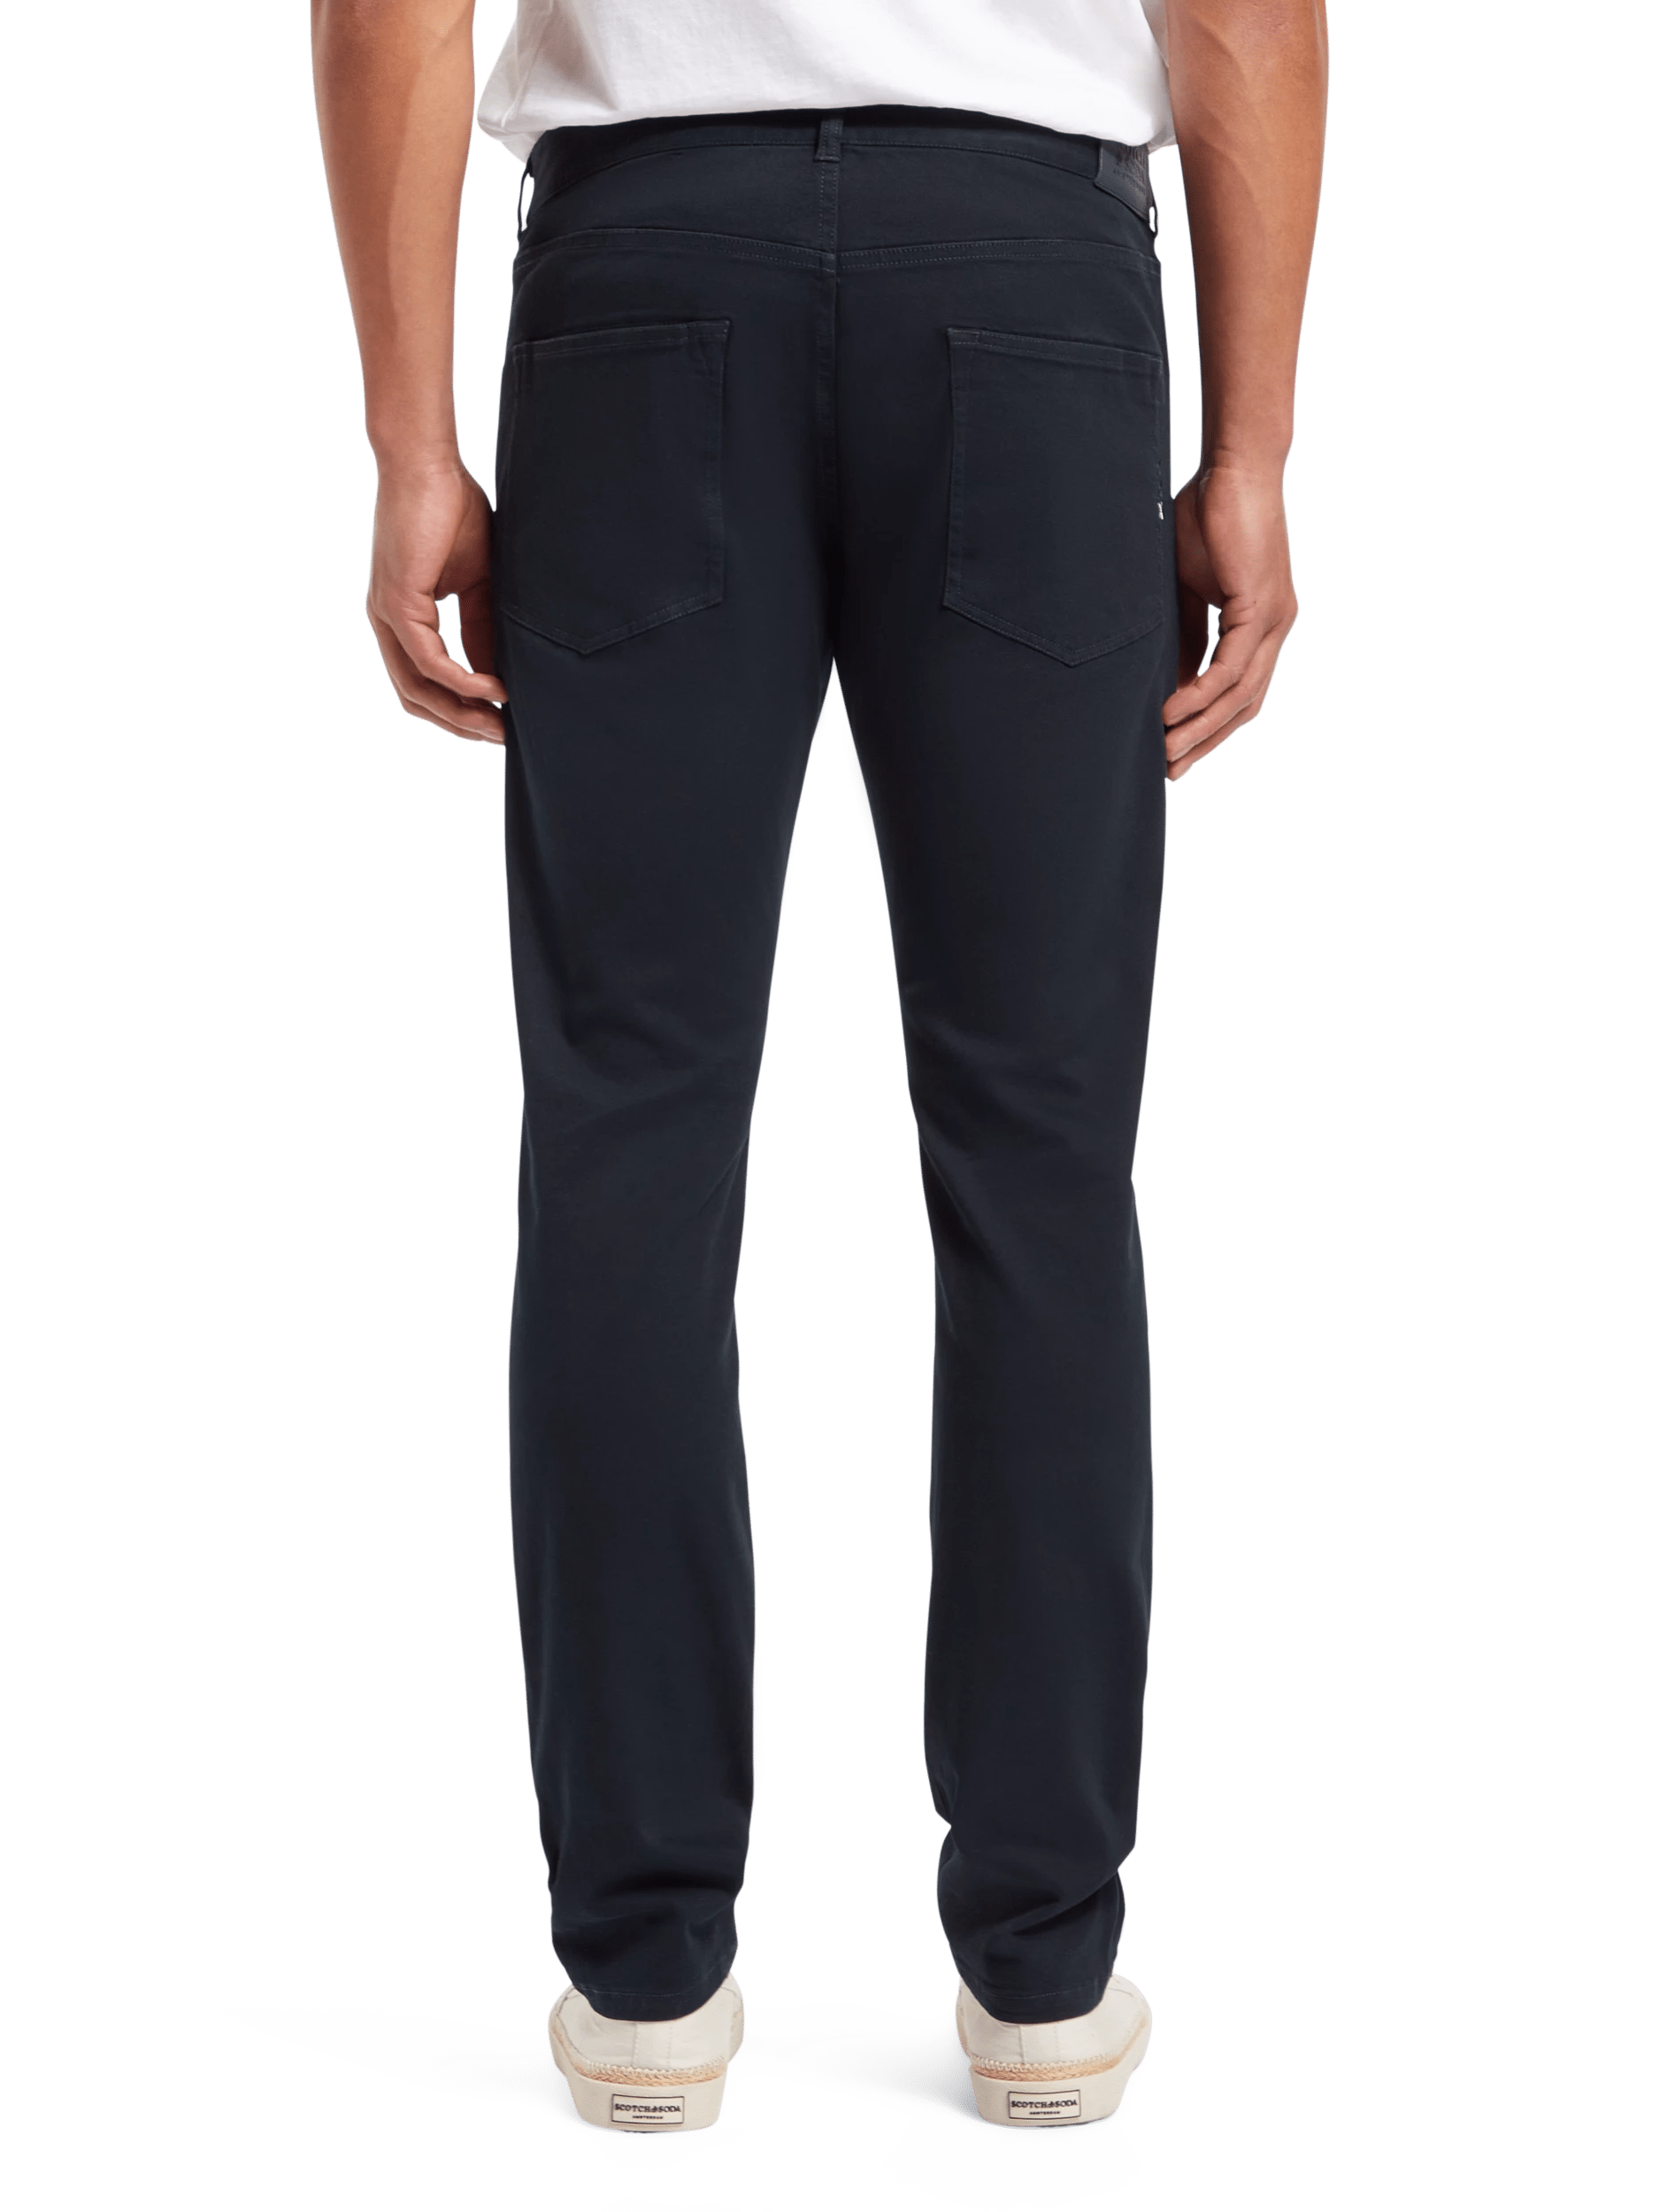 Scotch & Soda Ralston - Regular Slim fit garment-dyed 5-pocket pants FIT-BCK